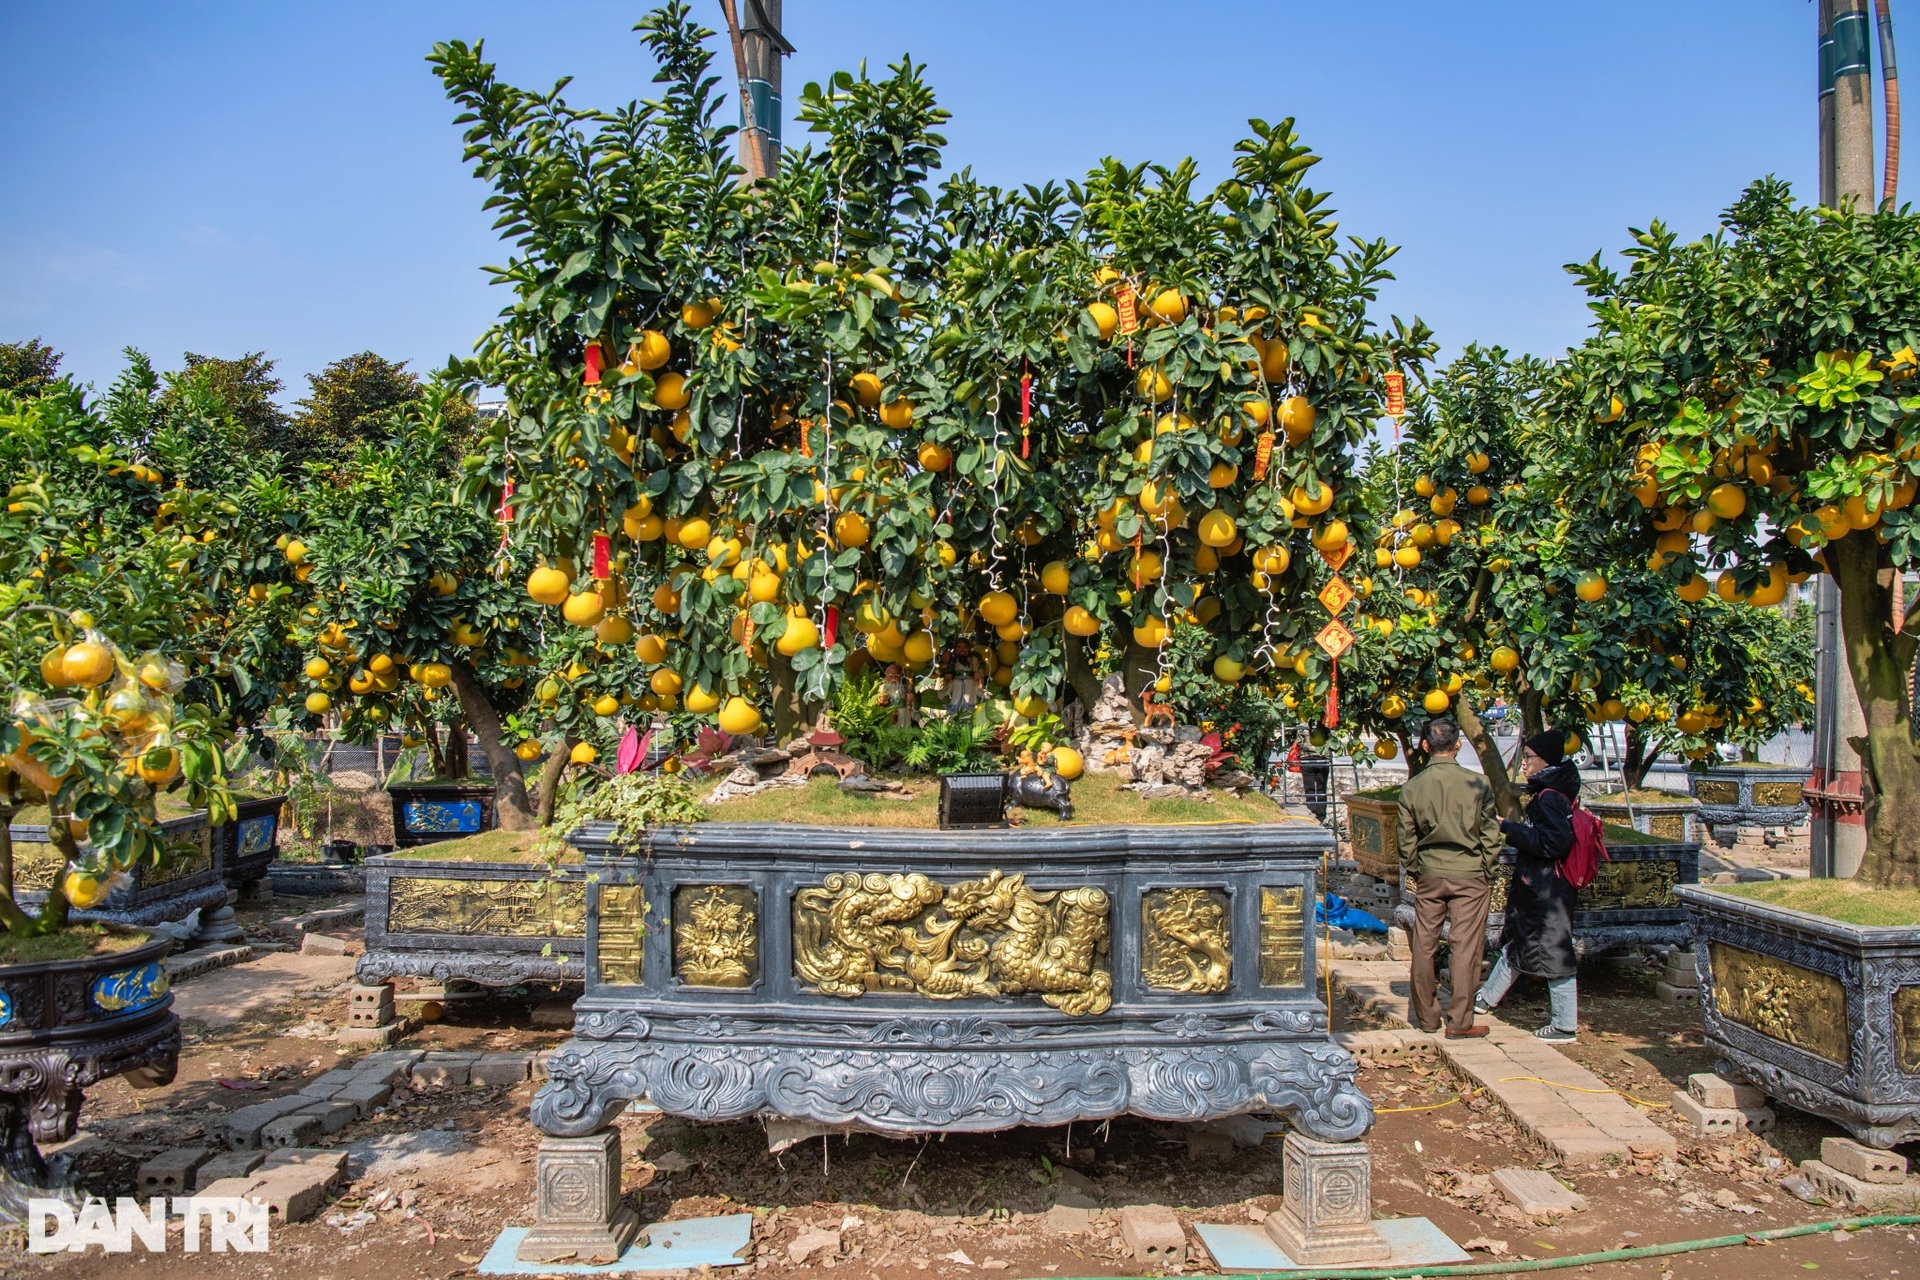 Unique 400-fruit Dien pomelo tree for sale for 200 million dong in Hanoi - 3